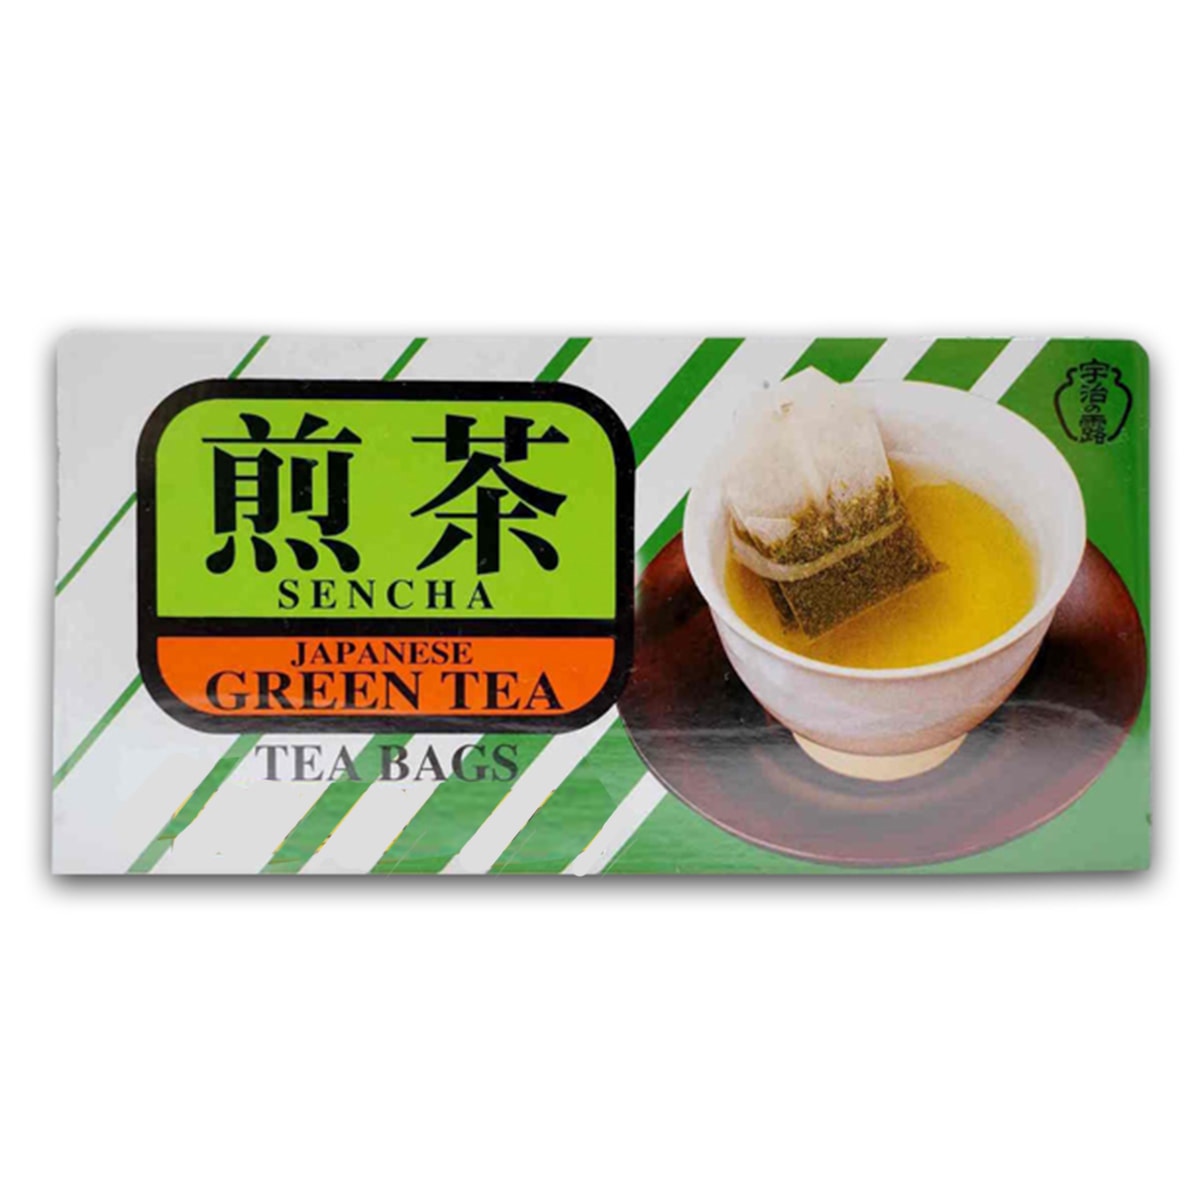 Buy Ujinotsuyu Japanese Green Tea (Sencha) (20 Teabags) - 40 gm